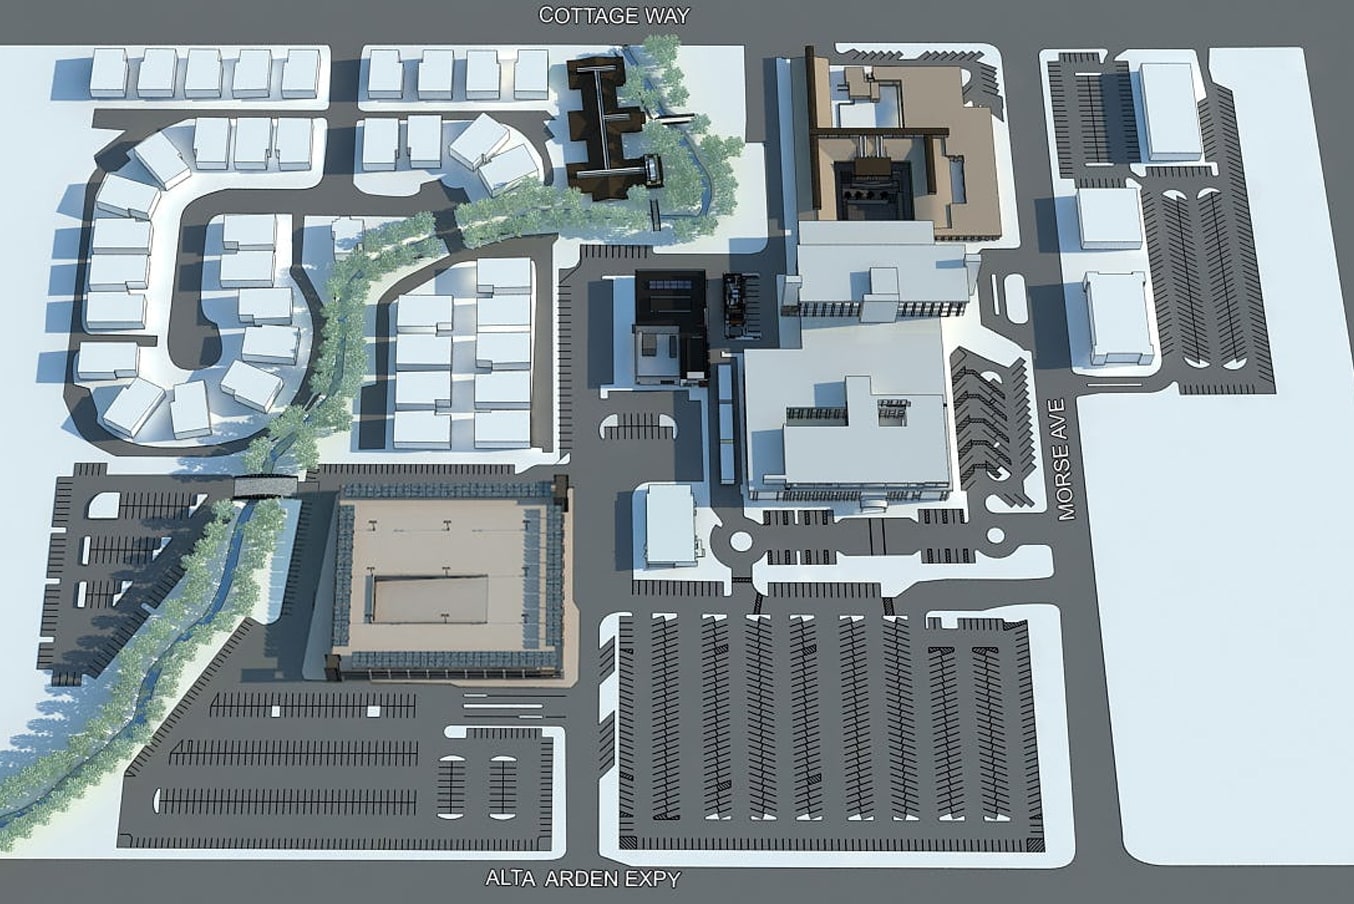 Aerial planning sketch of the Kaiser Permanente Central Utility Plant Sacramento Medical Center